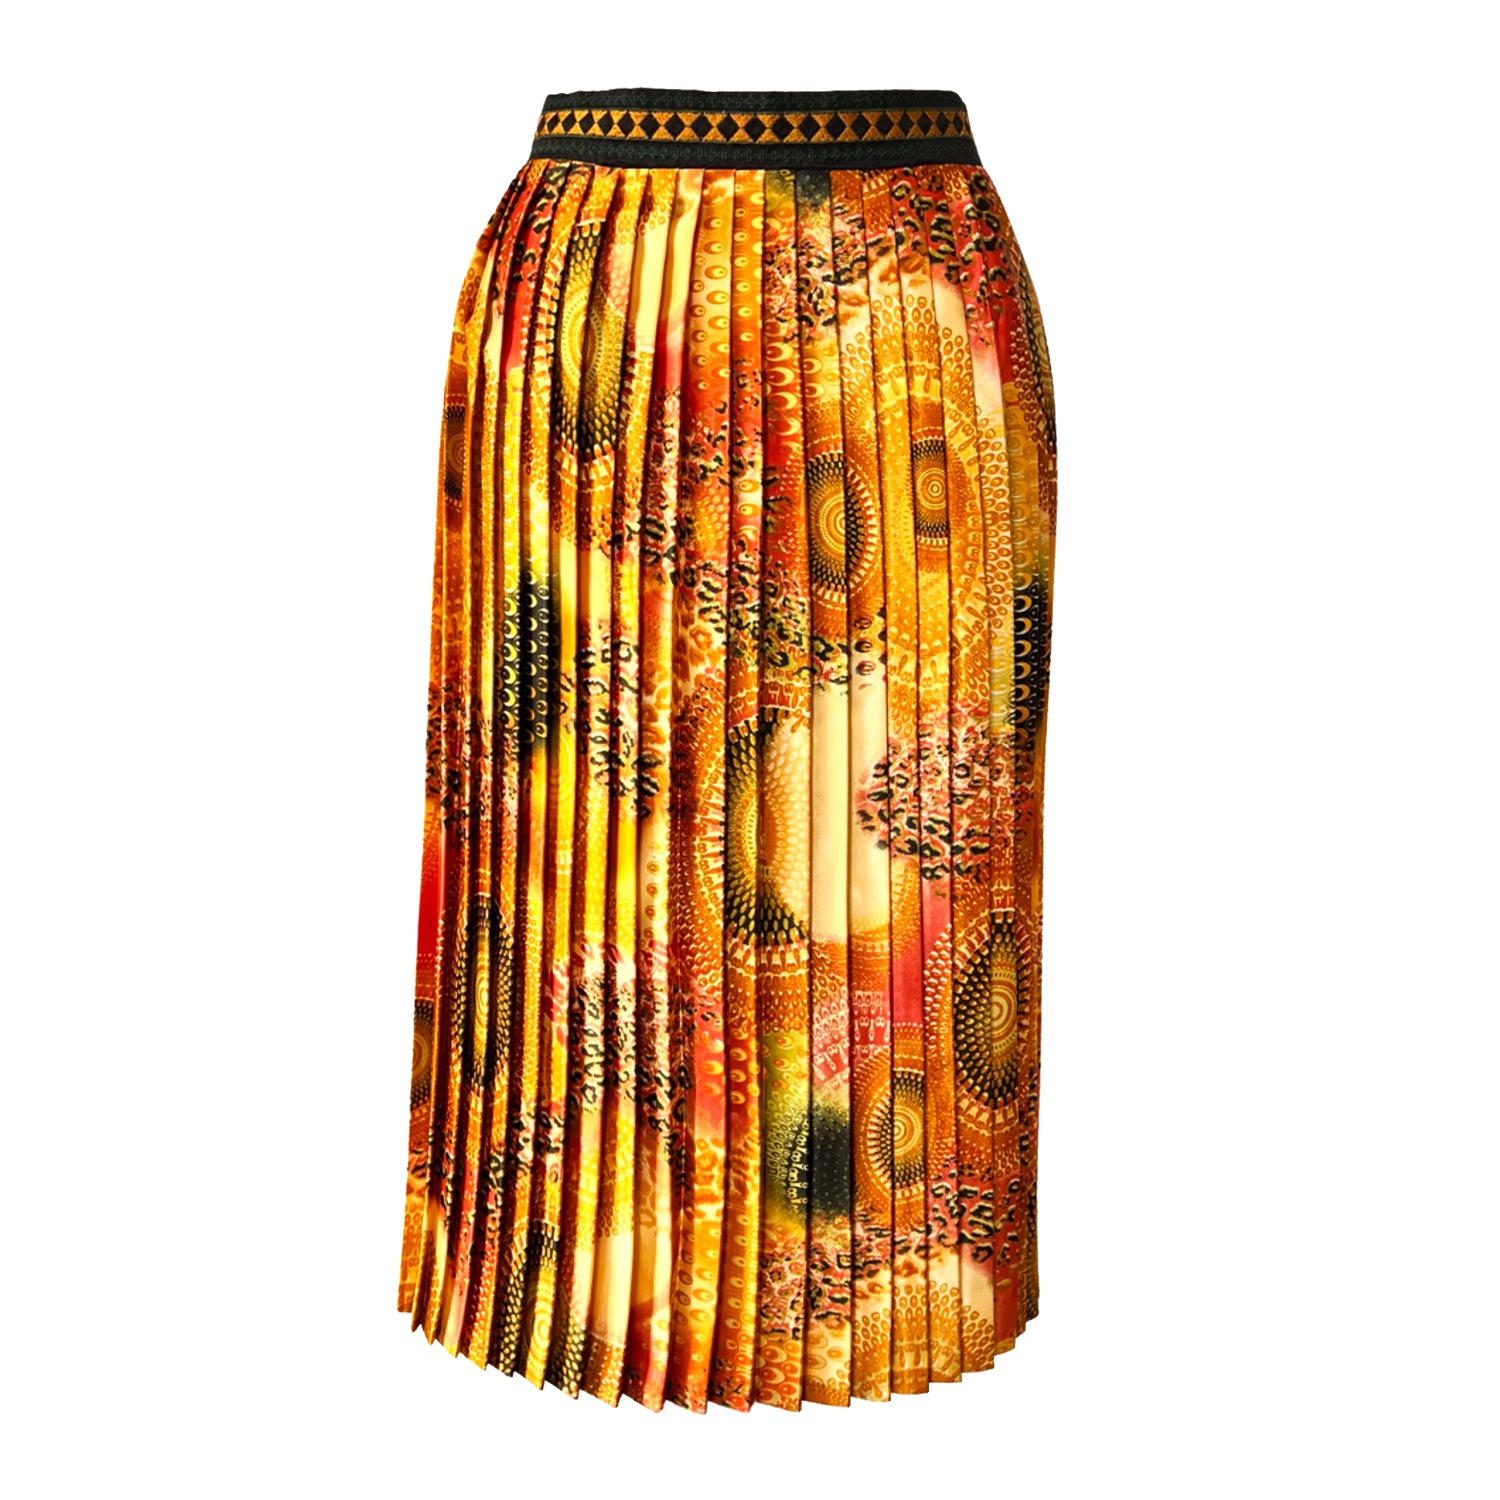 Embroidered Pleated Midi Skirt in Geometric Printed Orange